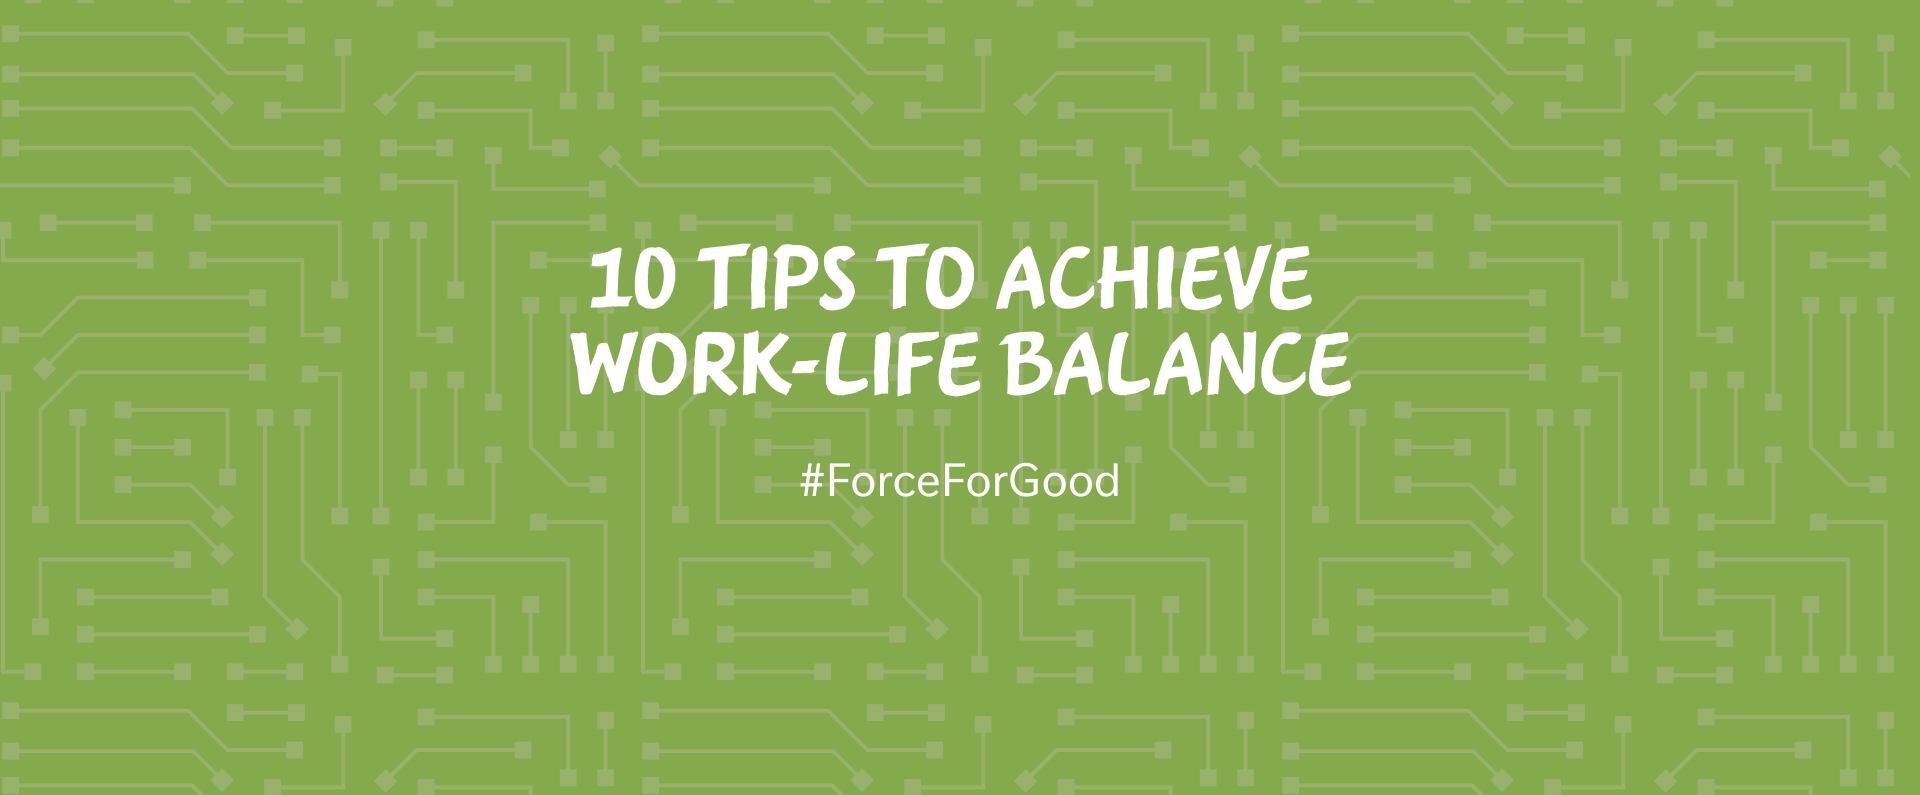 10 Tips to Achieve Work-Life Balance